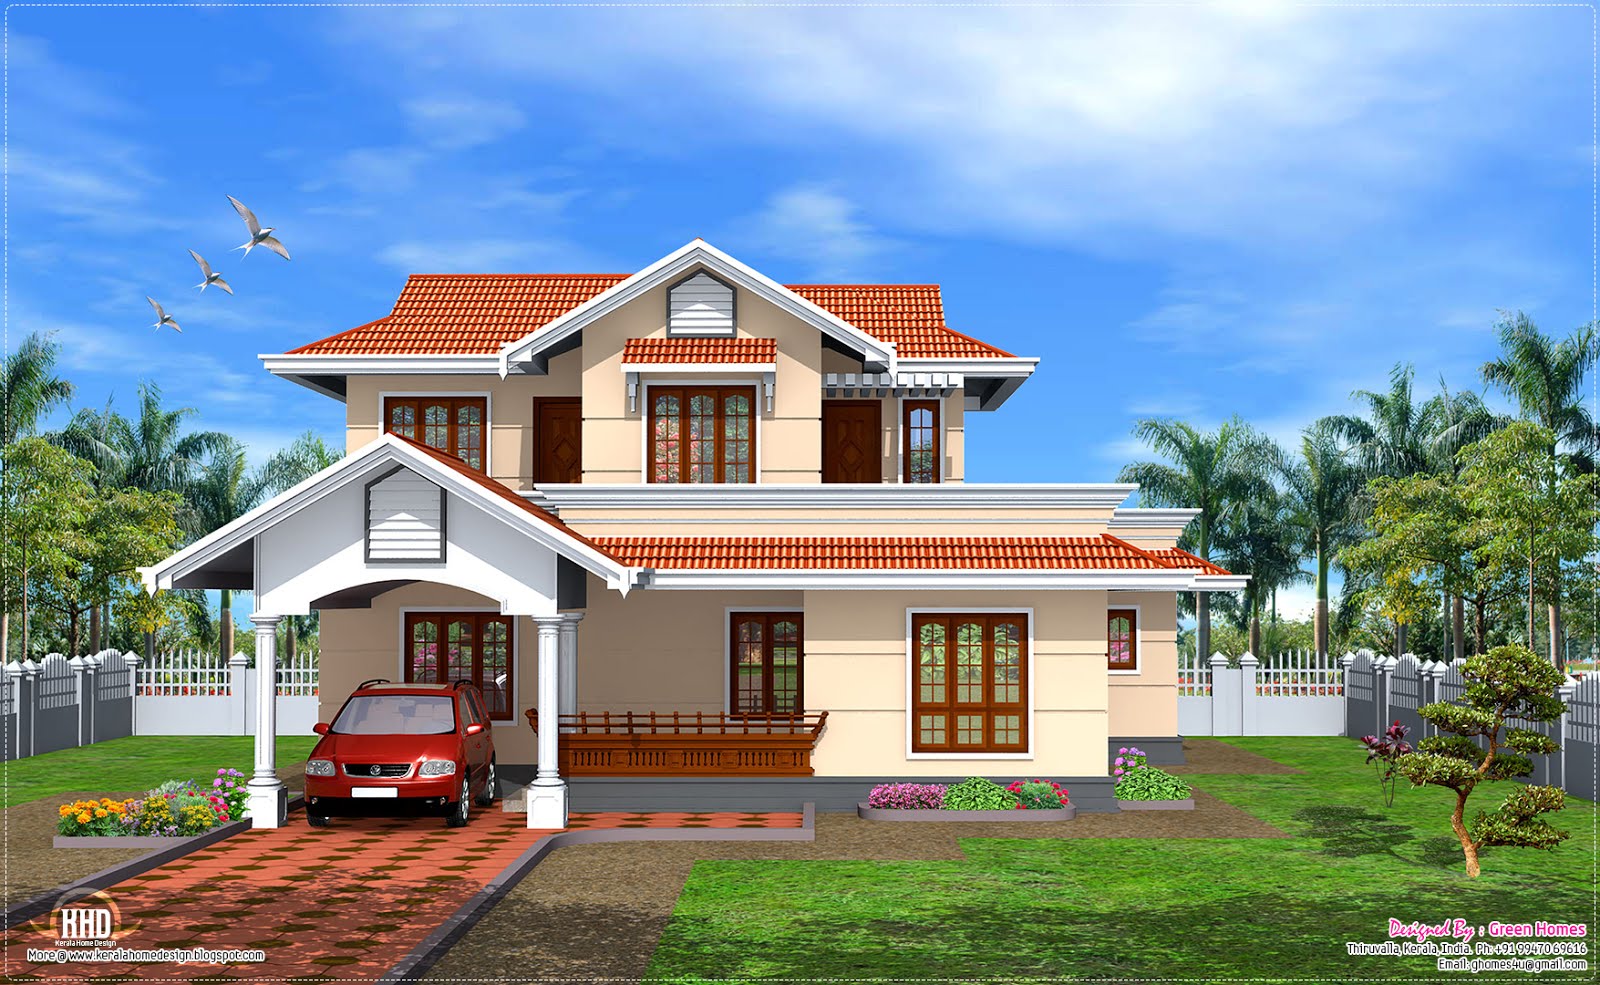  Kerala  model 1900 sq feet home  design  Enter your blog 